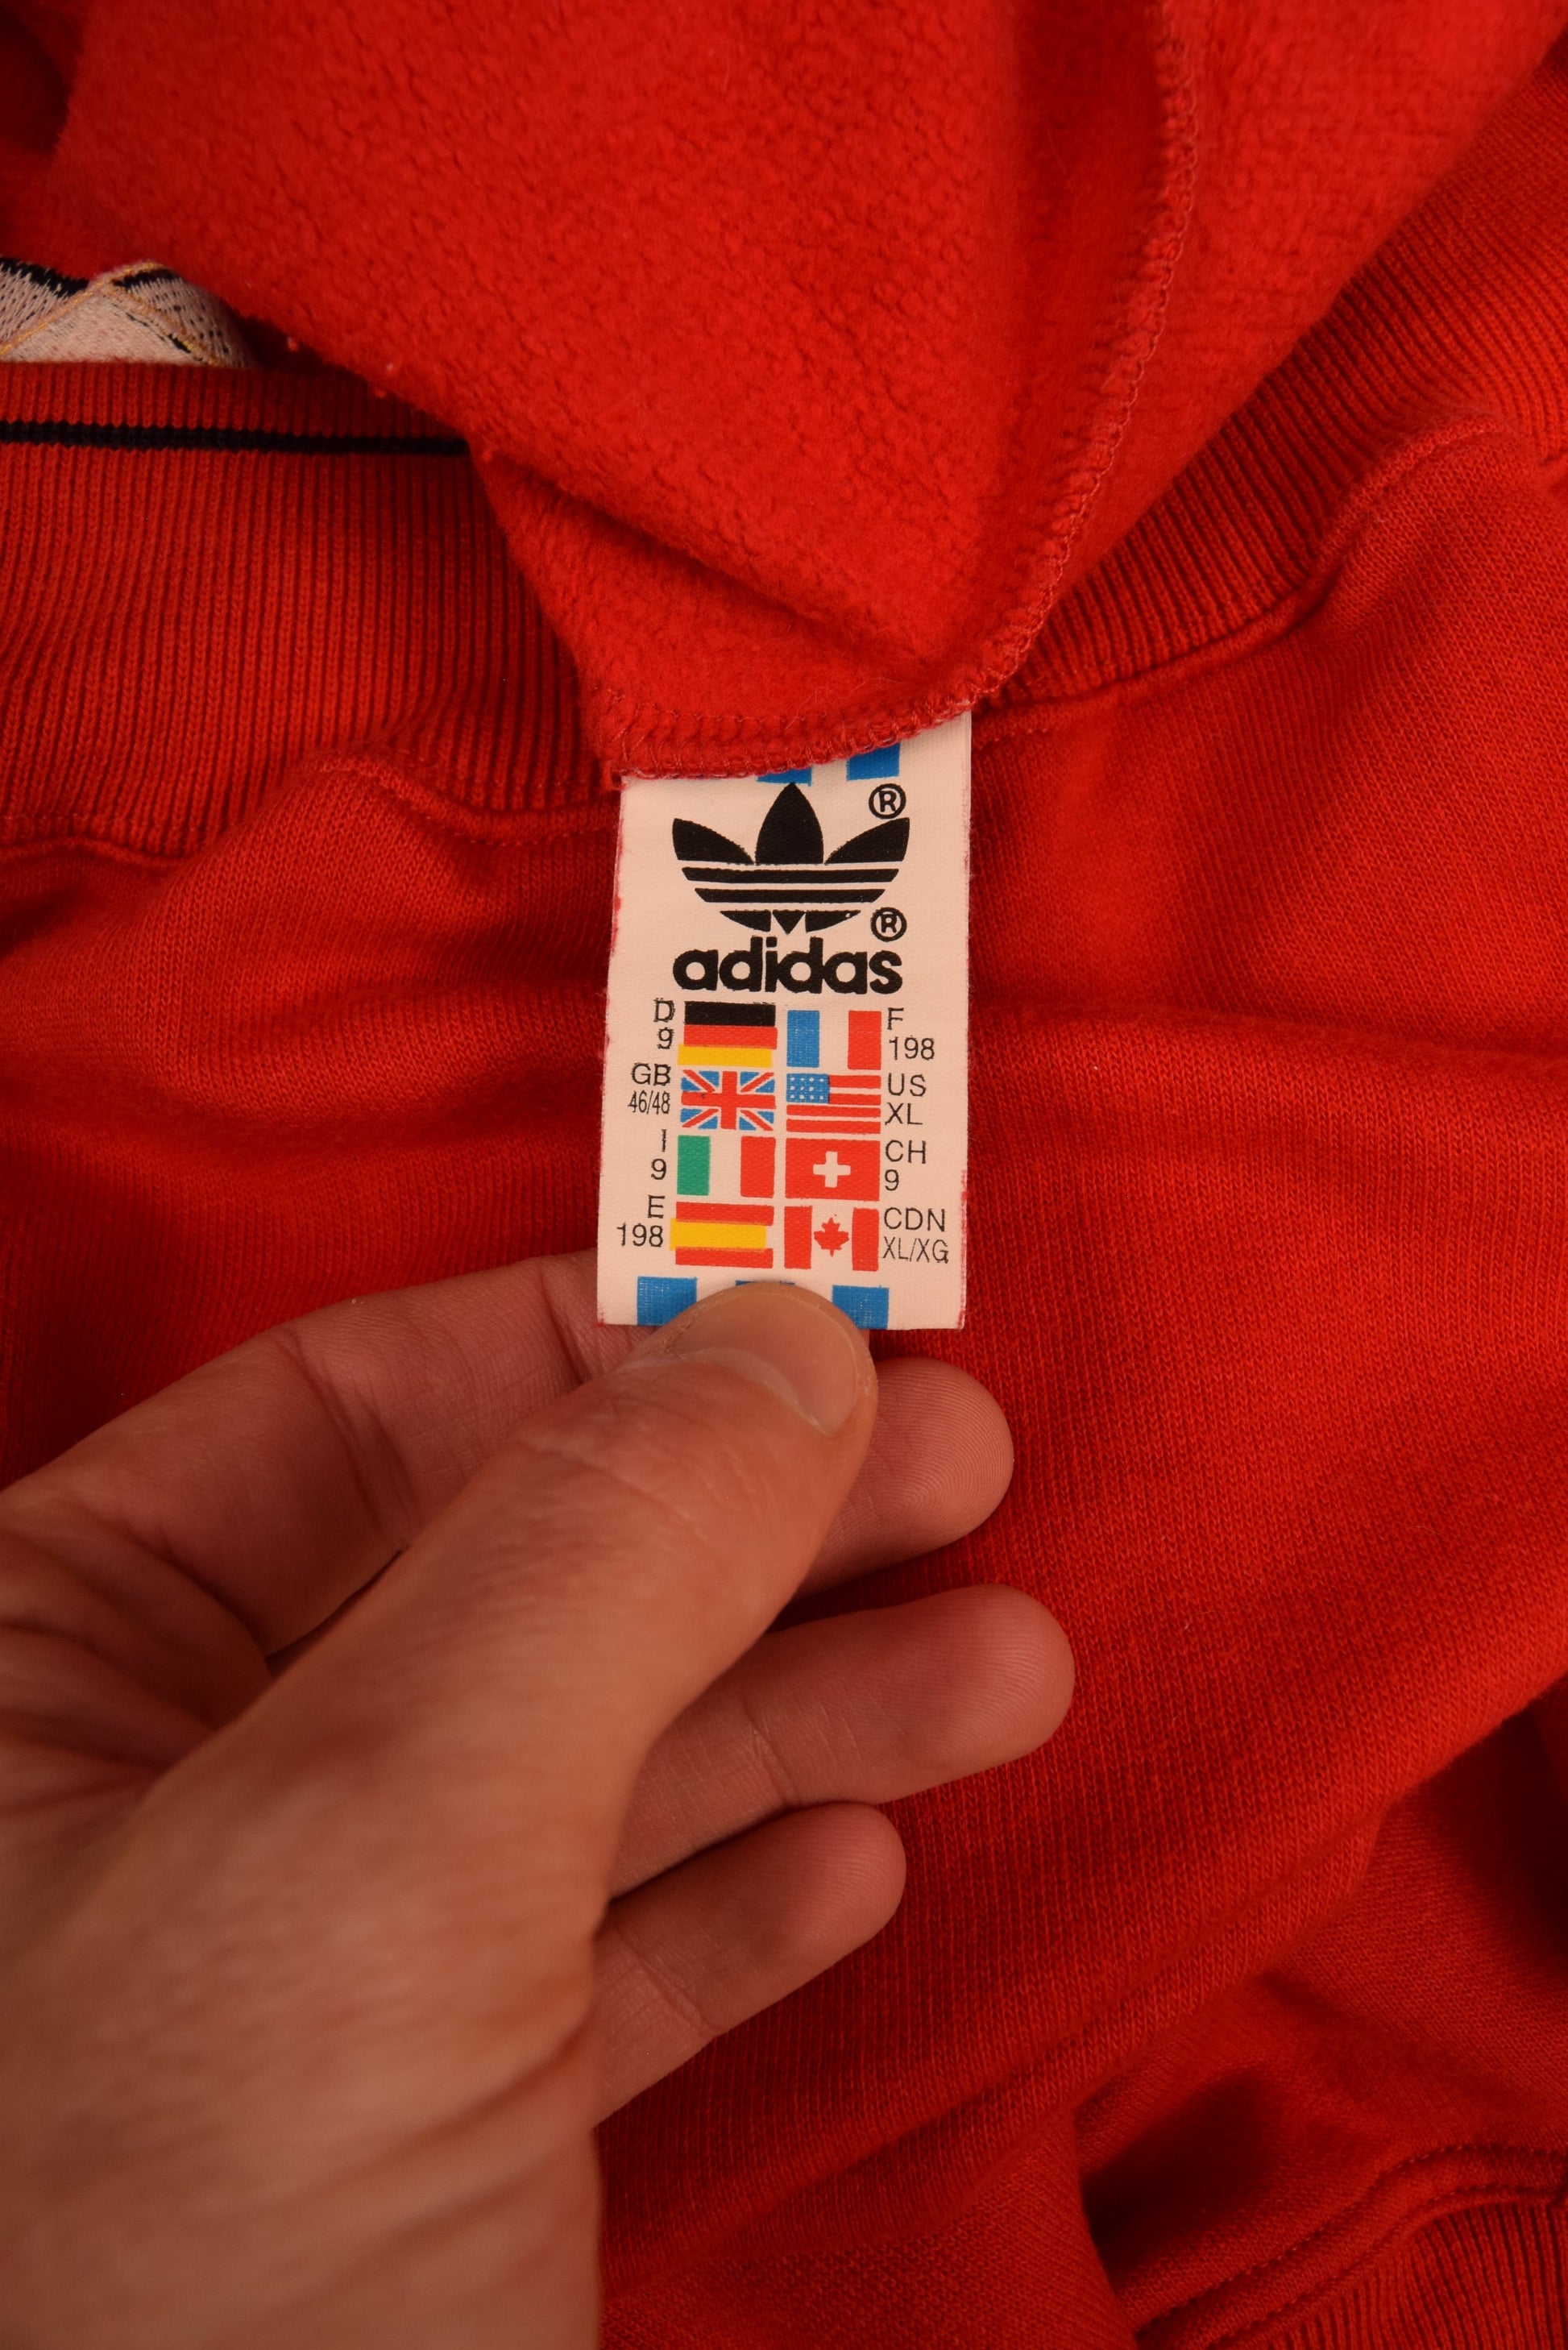 Rare 90's Feyenoord Rotterdam Adidas Sweatshirt CrewNeck Red Stad Rotterdam Verzekeringen Size XL Heavy Cotton